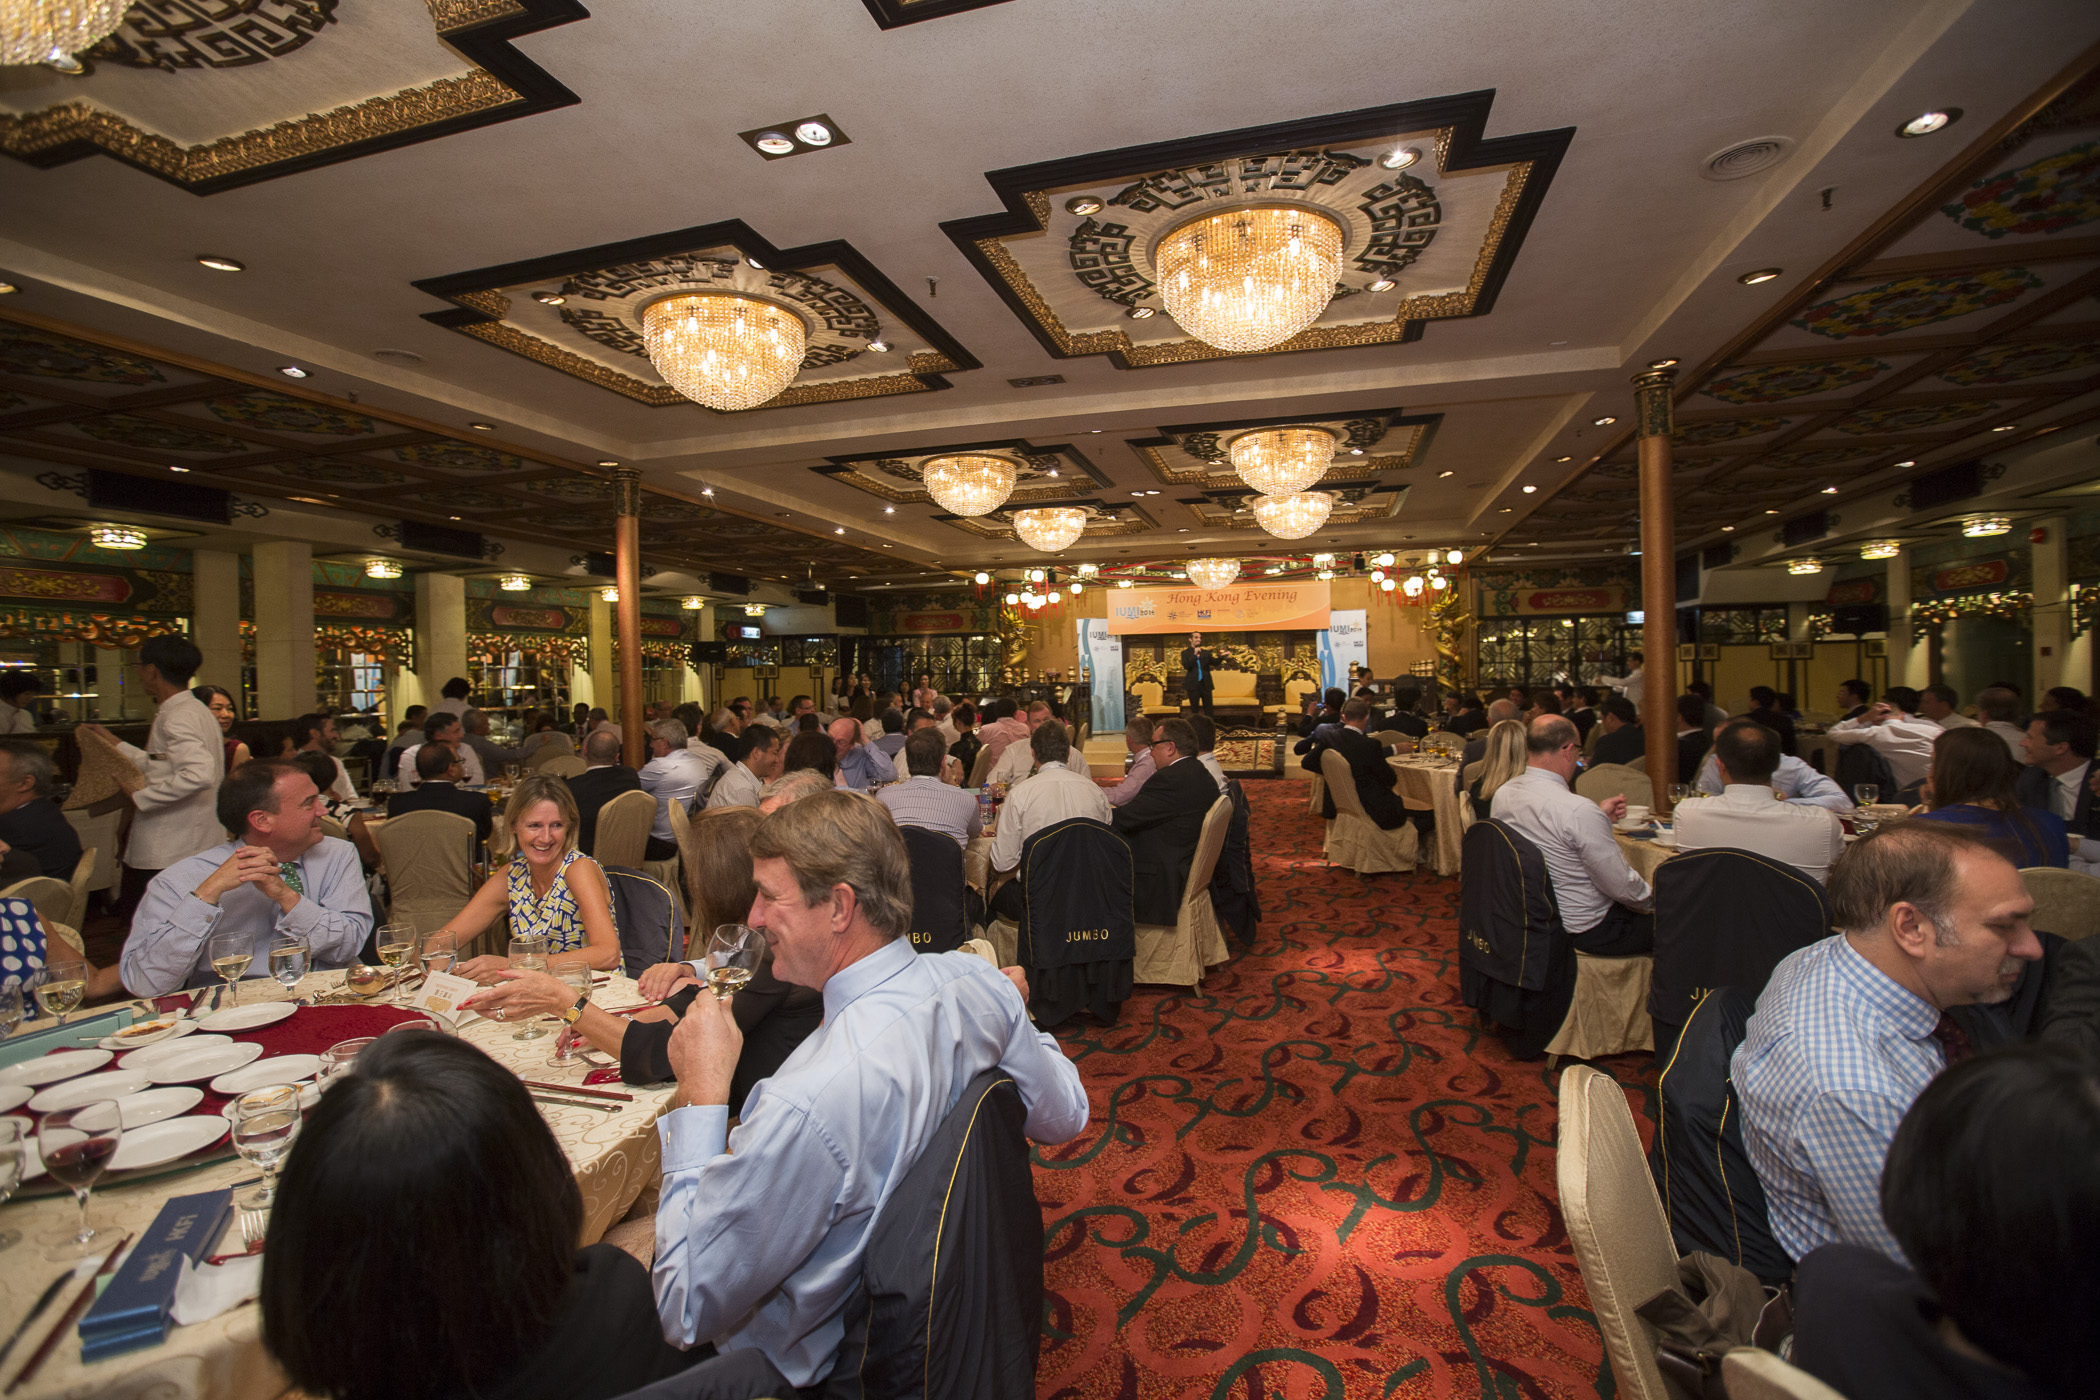 International Union of Marine Insurance 2014 Hong Kong - Dinner (inside the Palace) (1)